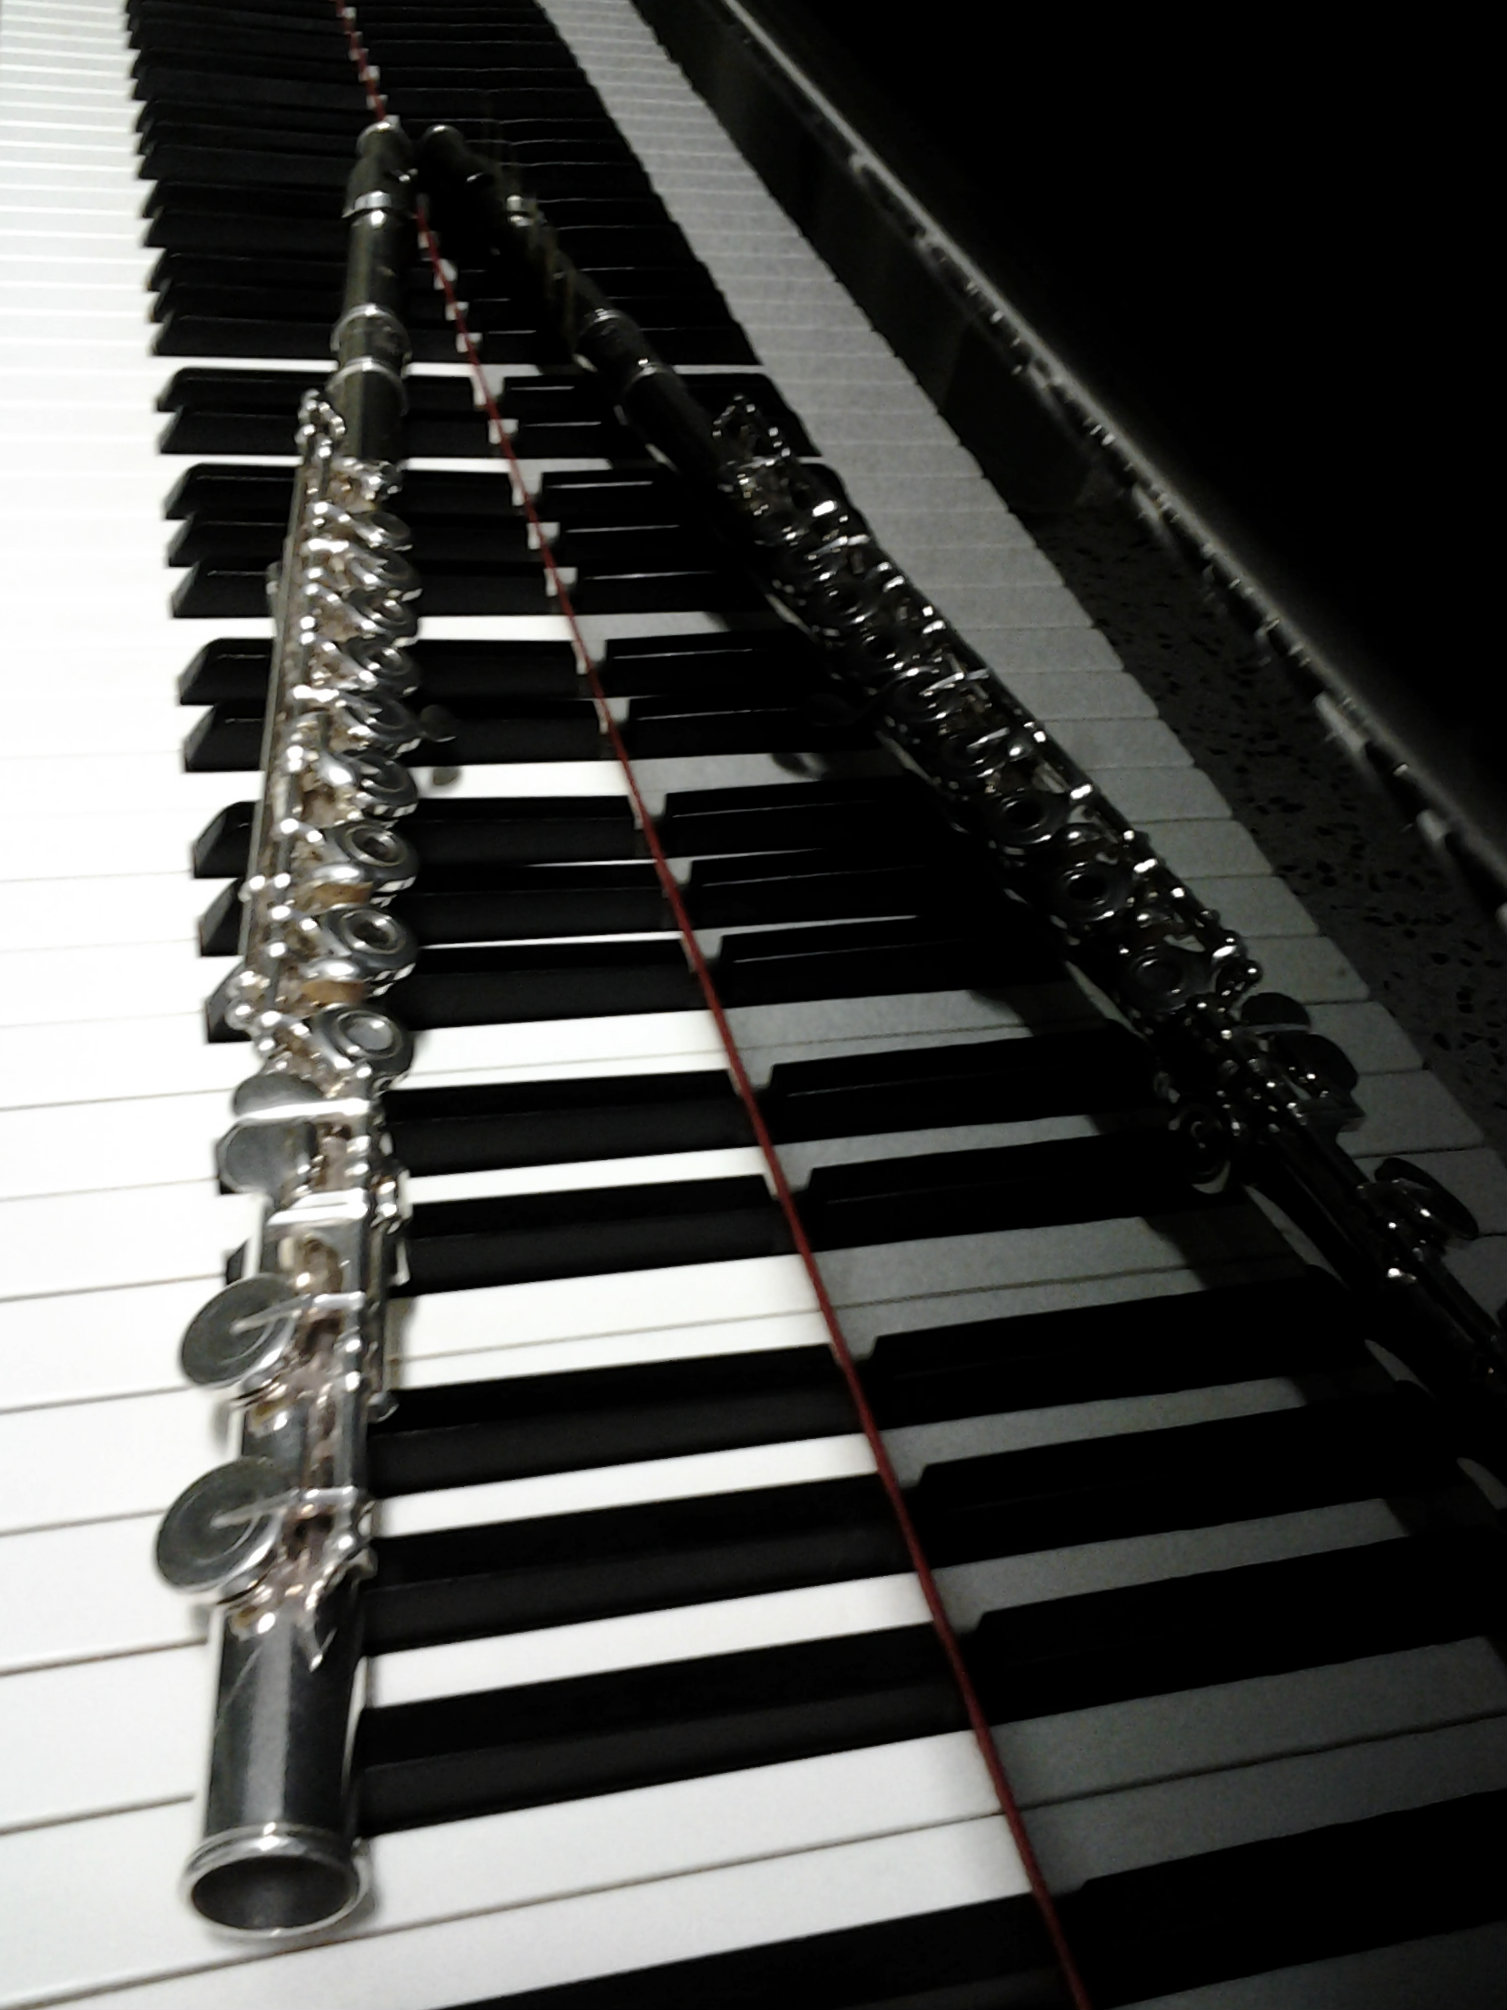 Flauta travesera sobre teclado de piano